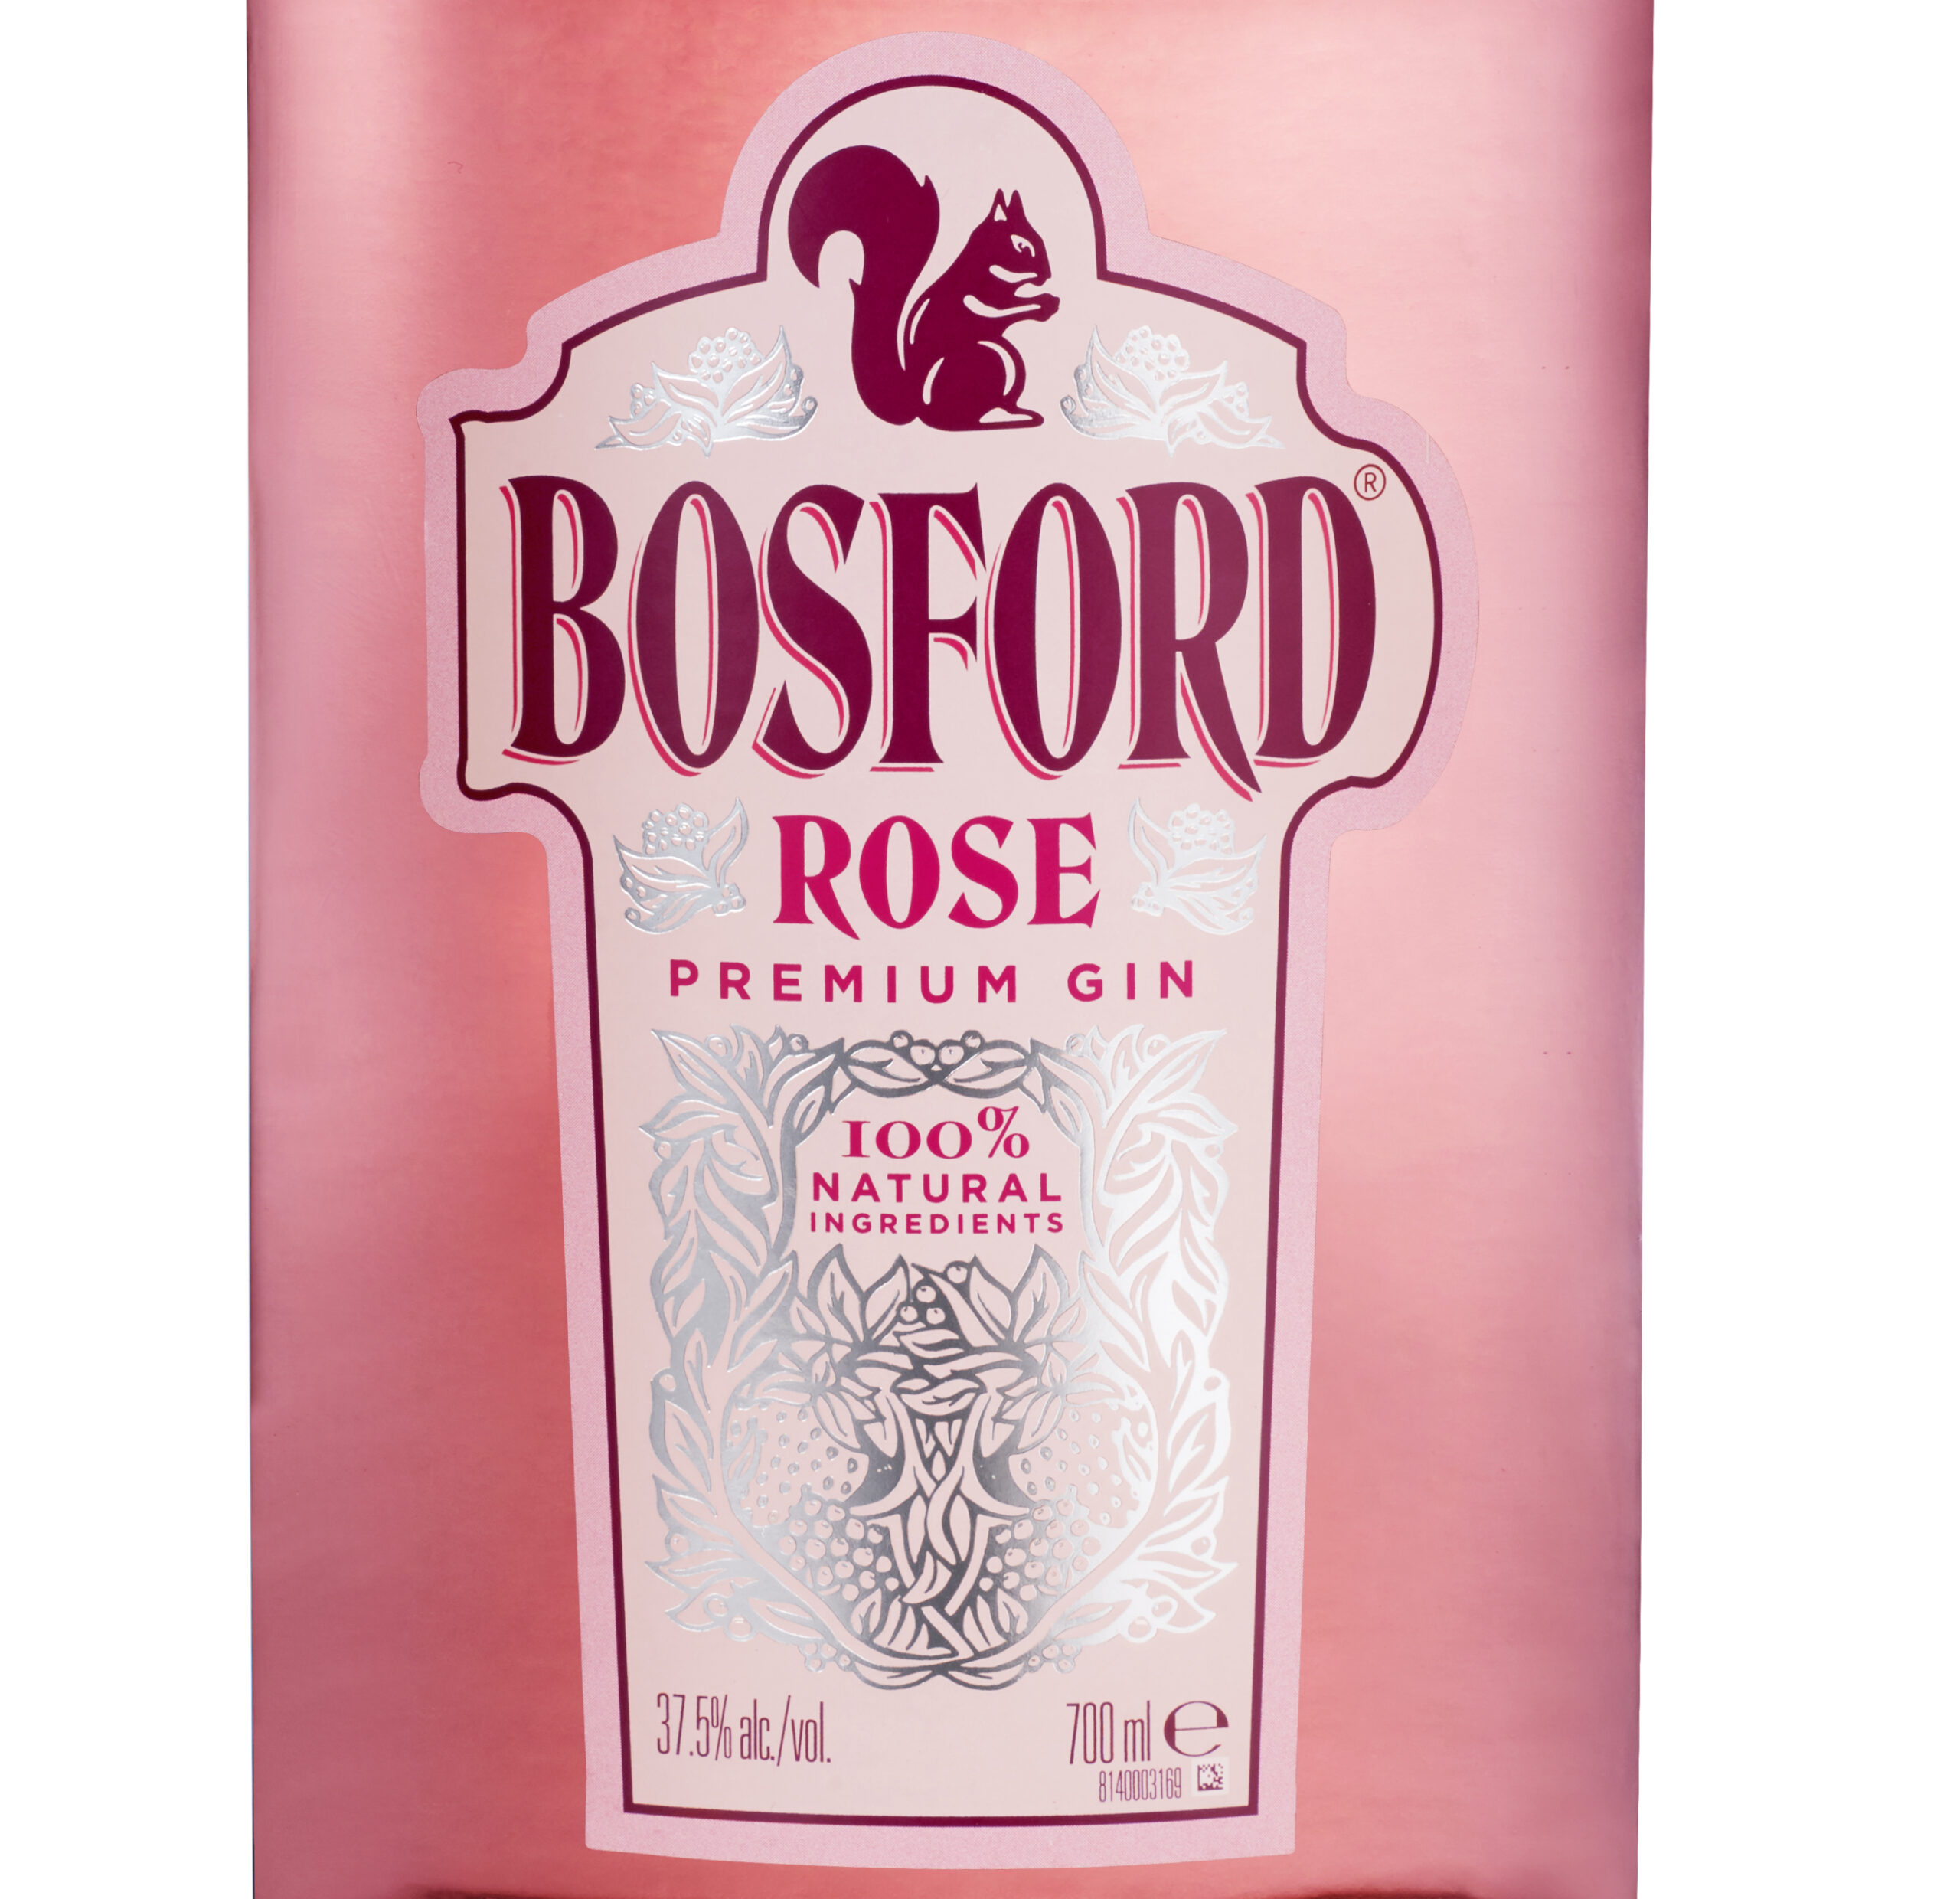 Bosford rosé, gin aromatisé